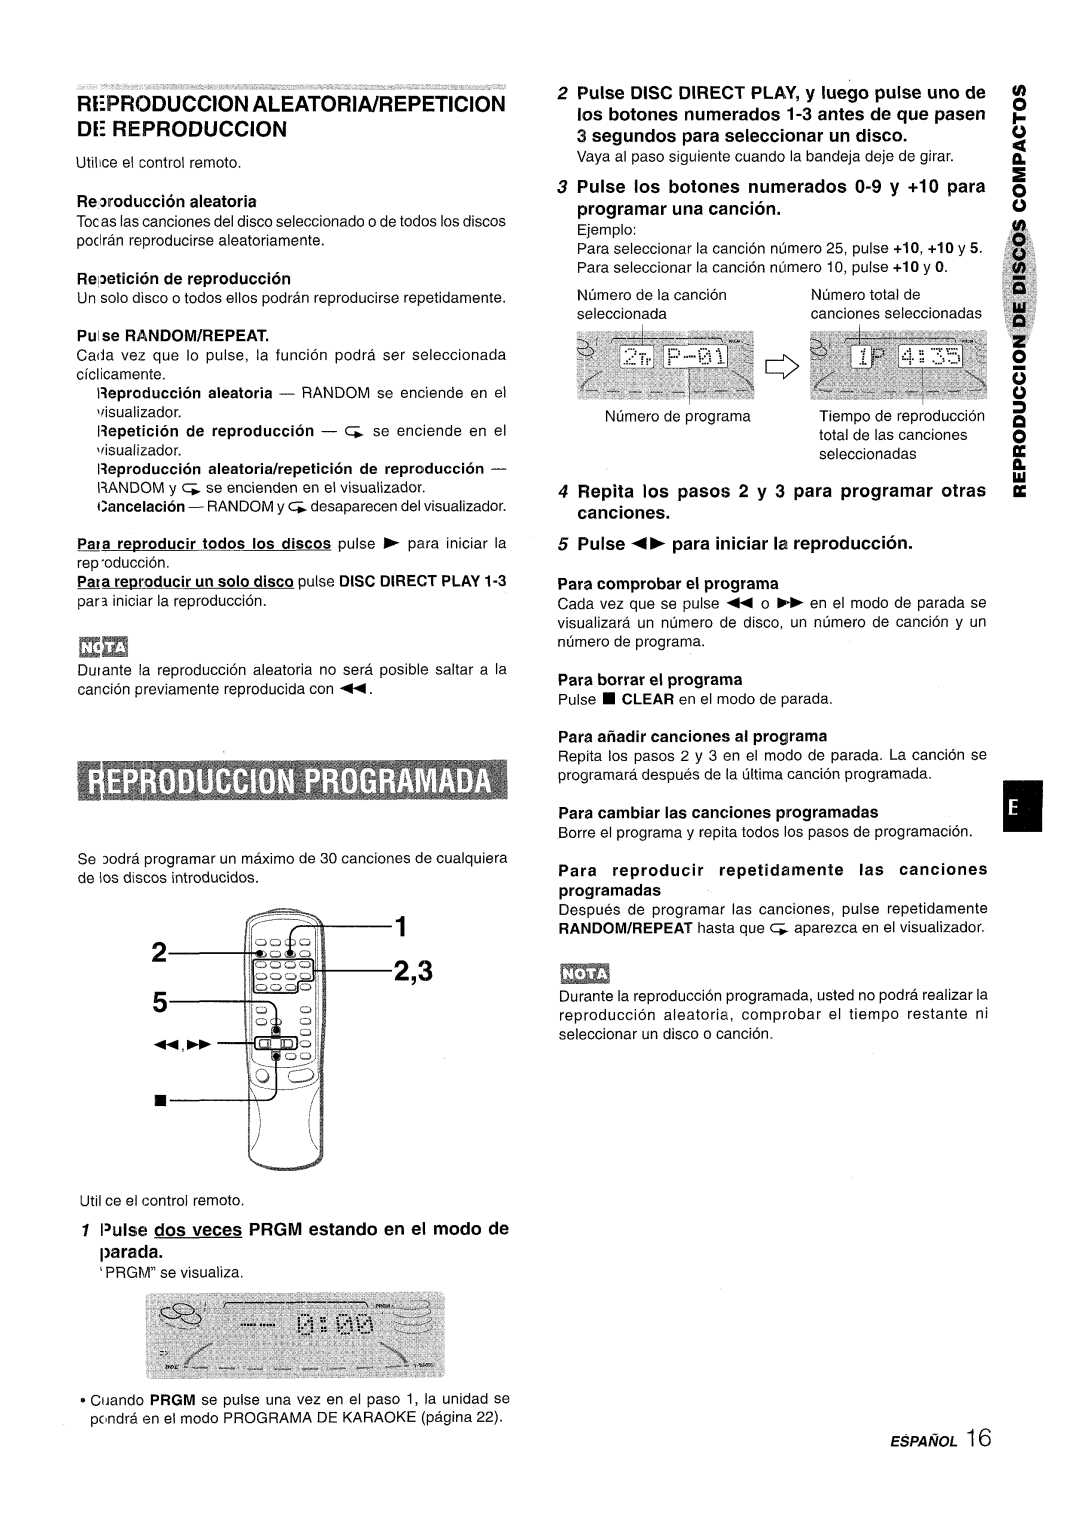 Aiwa NSX-A909 ESPAfiOL16, RE!PFWDUCCION’ALEATORli/REPETITION DE REPRODUCTION, Pulse, Disc, Direct, PLAY, y Iuego pulse 